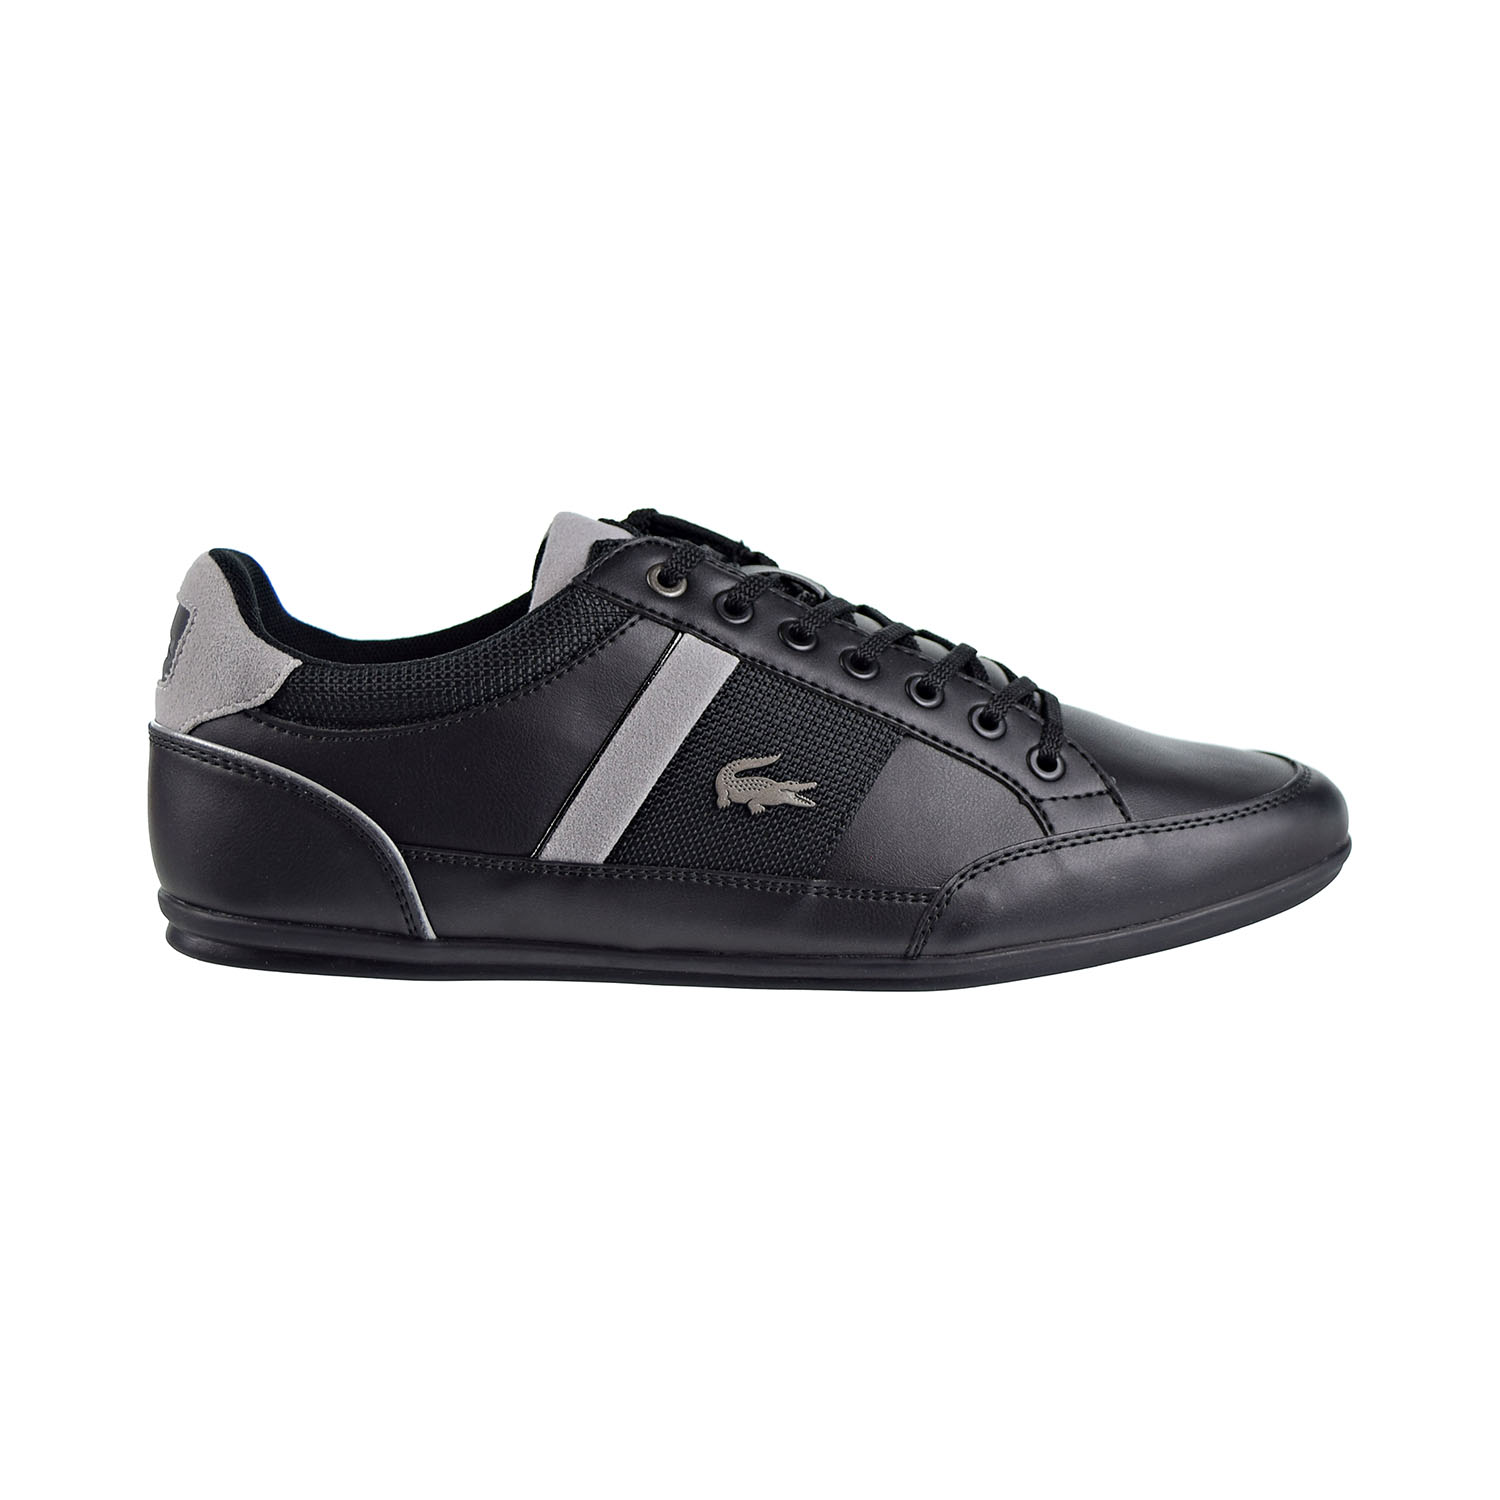 Shoes Black-Grey 7-36CAM0008-231 